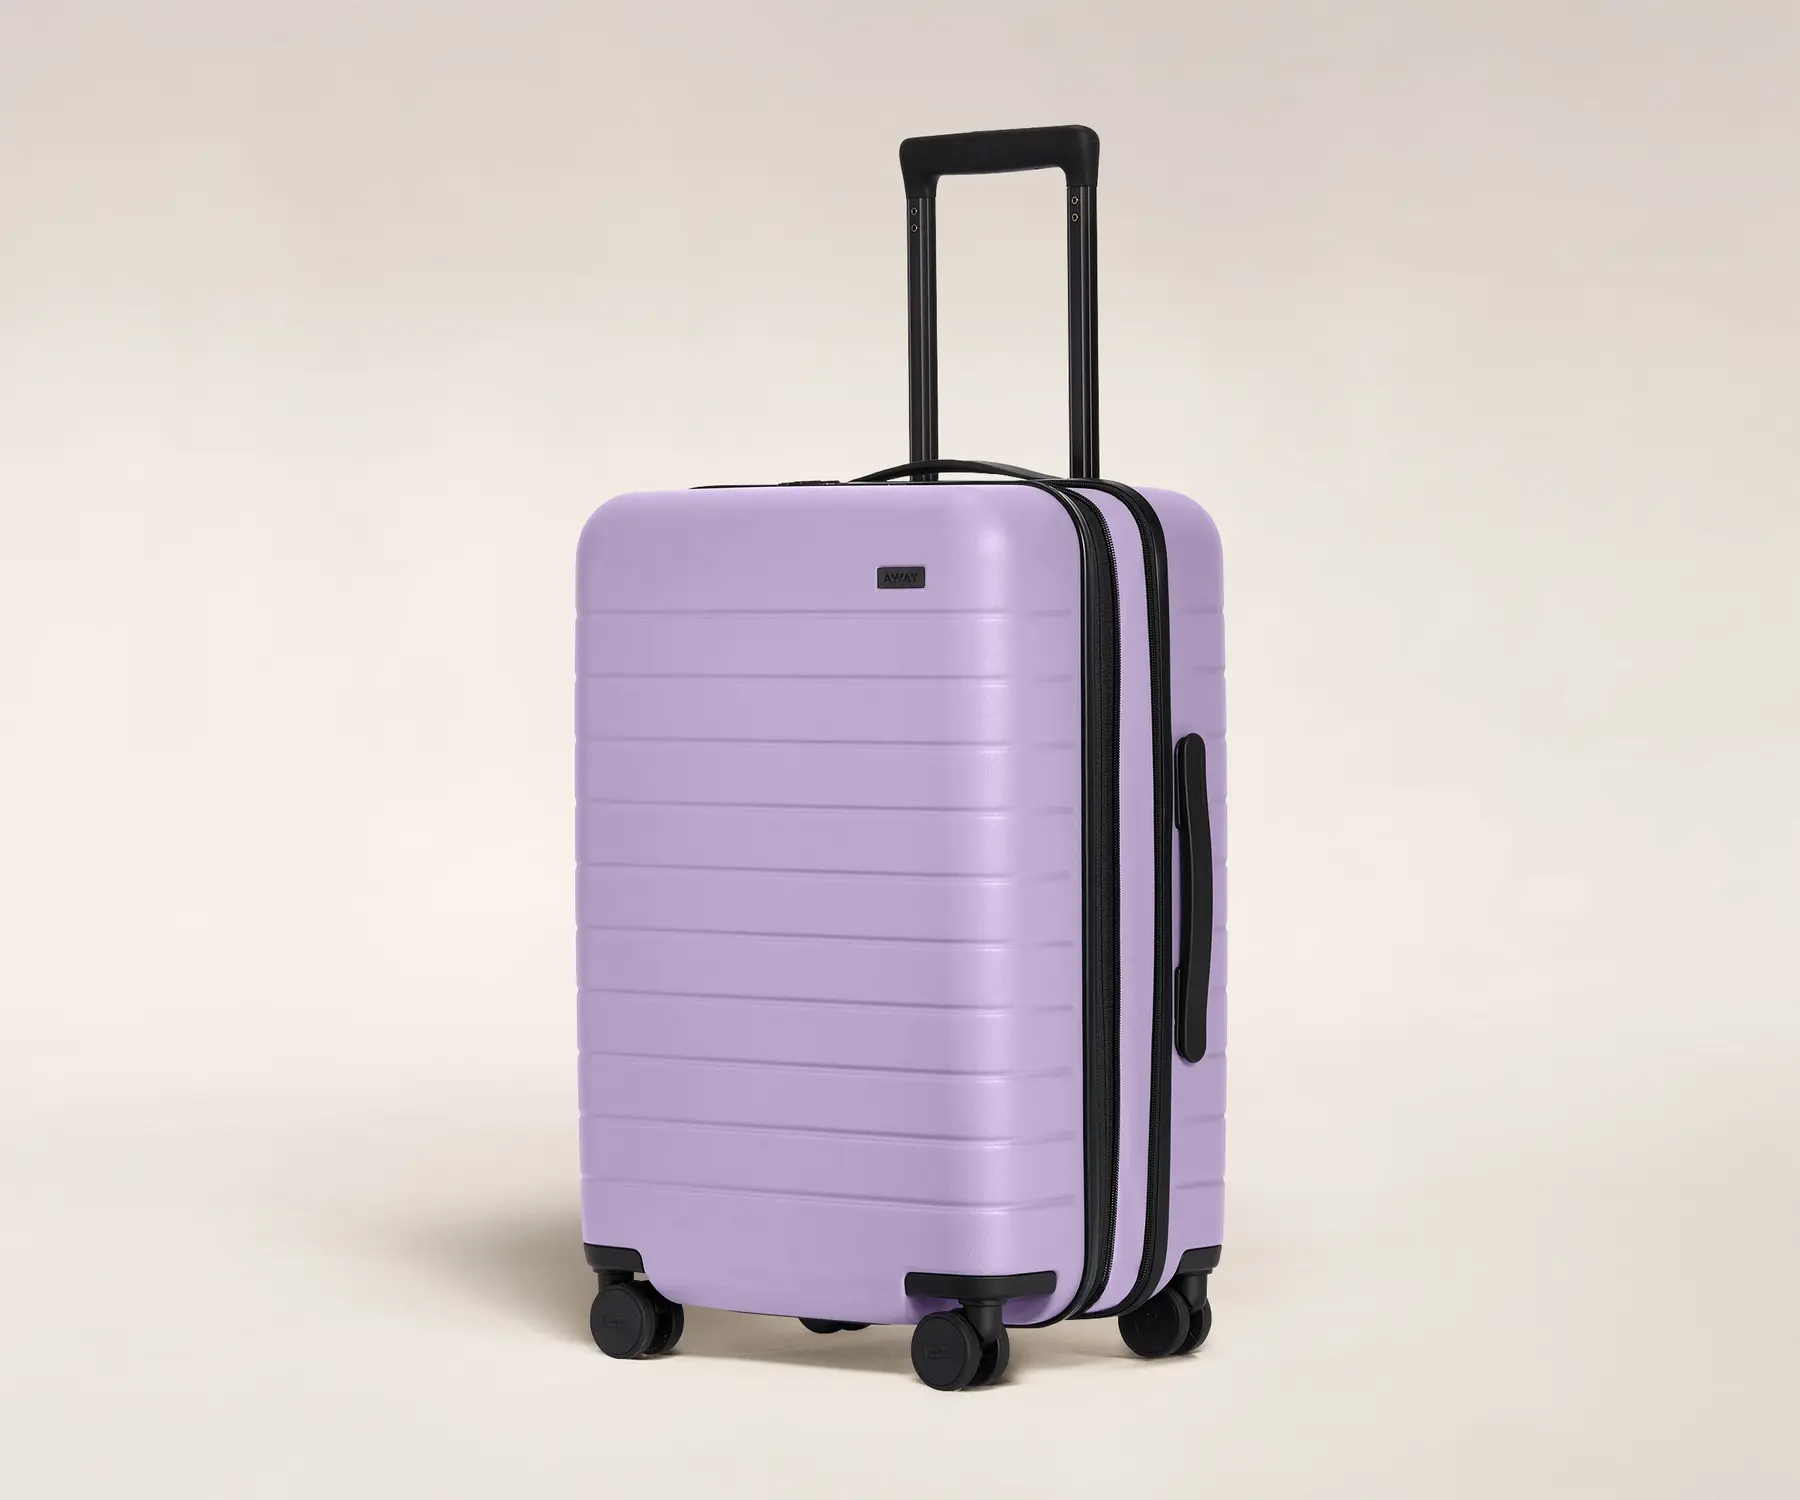 Cyber Week Deal 2022: Coolife Luggage Set Sale